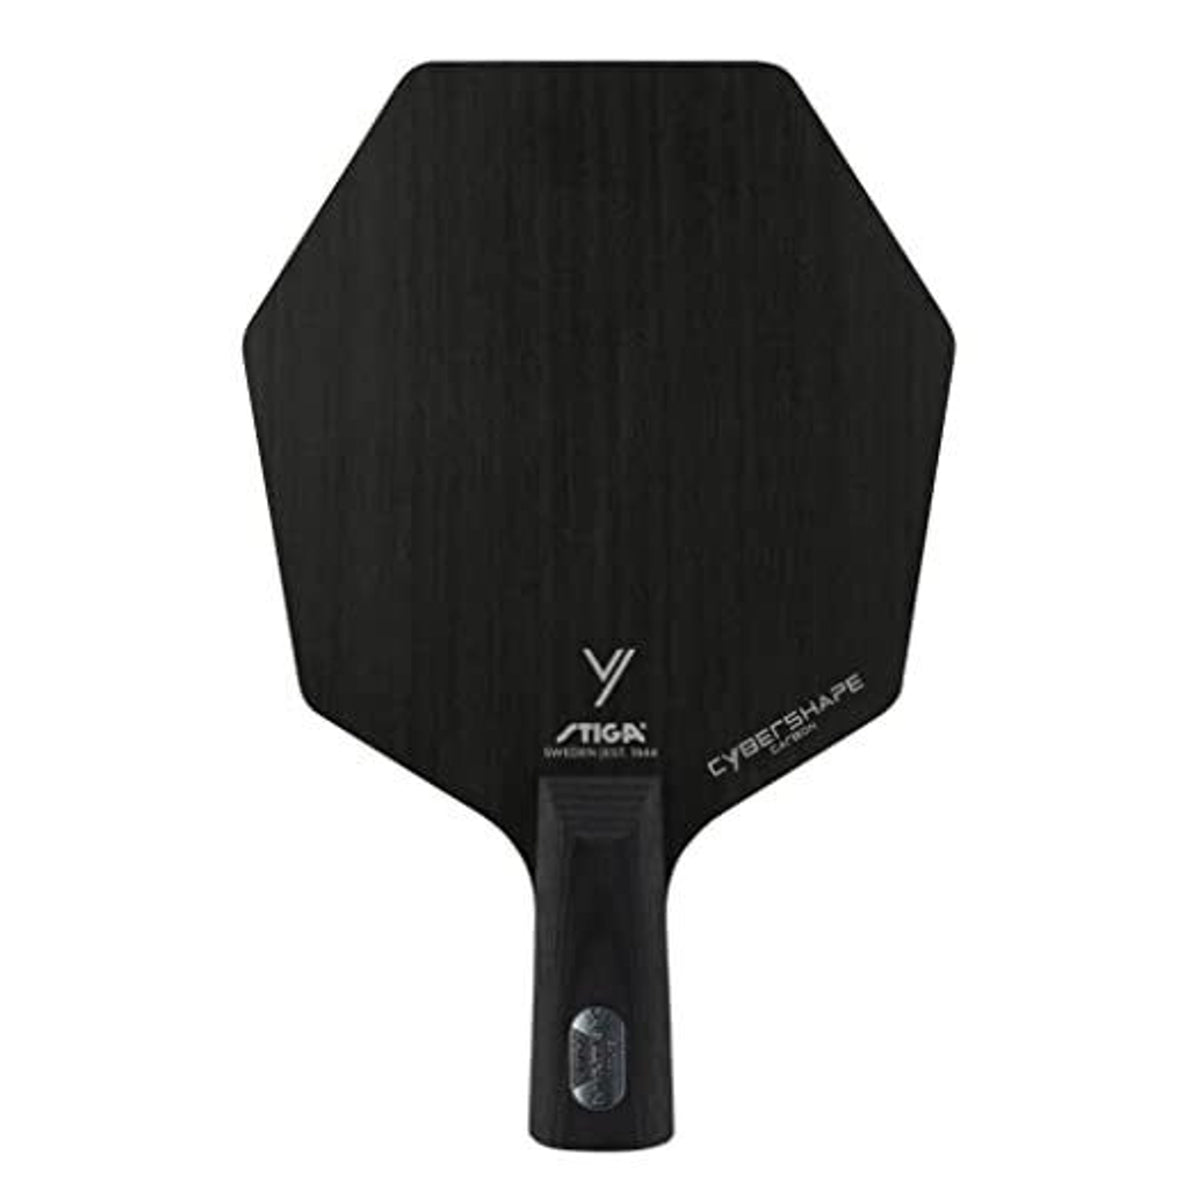 STIGA Cybershape Carbon Table Tennis Blade (Penhold)